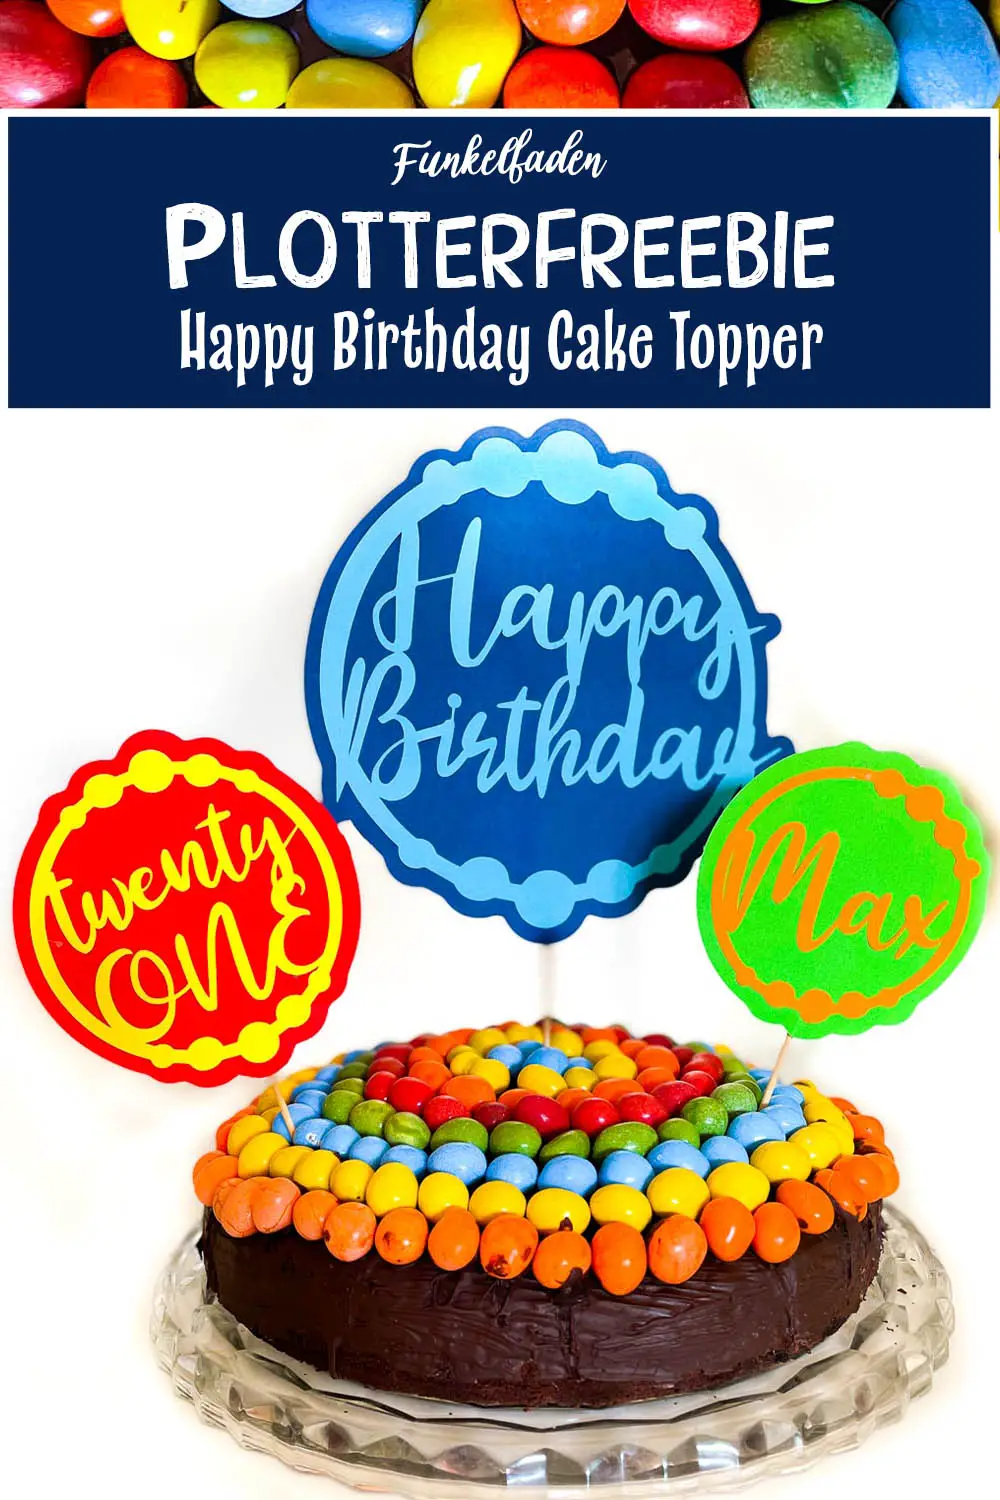 Happy Birthday Cake Topper + Plotter Freebie